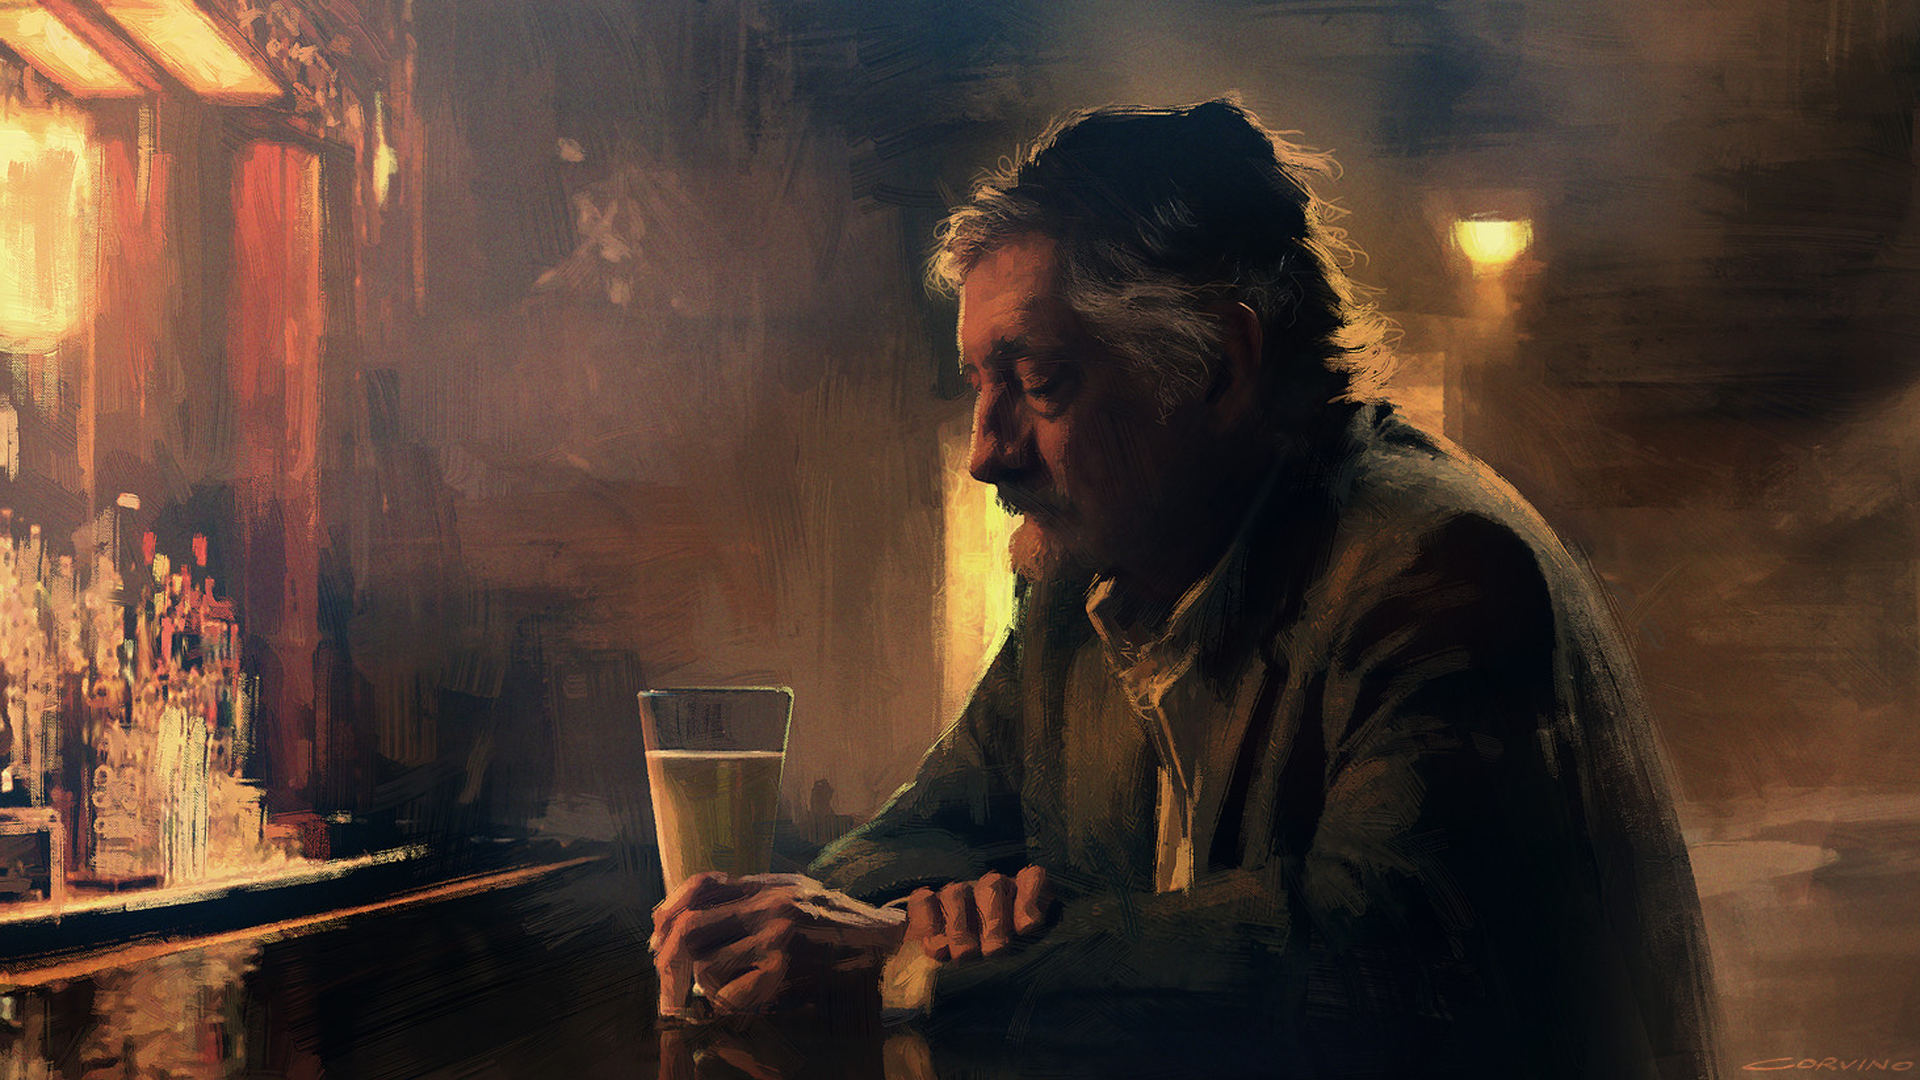 Francesco Corvino Digital Art Artwork Alone Drinking Bar Men 1920x1080